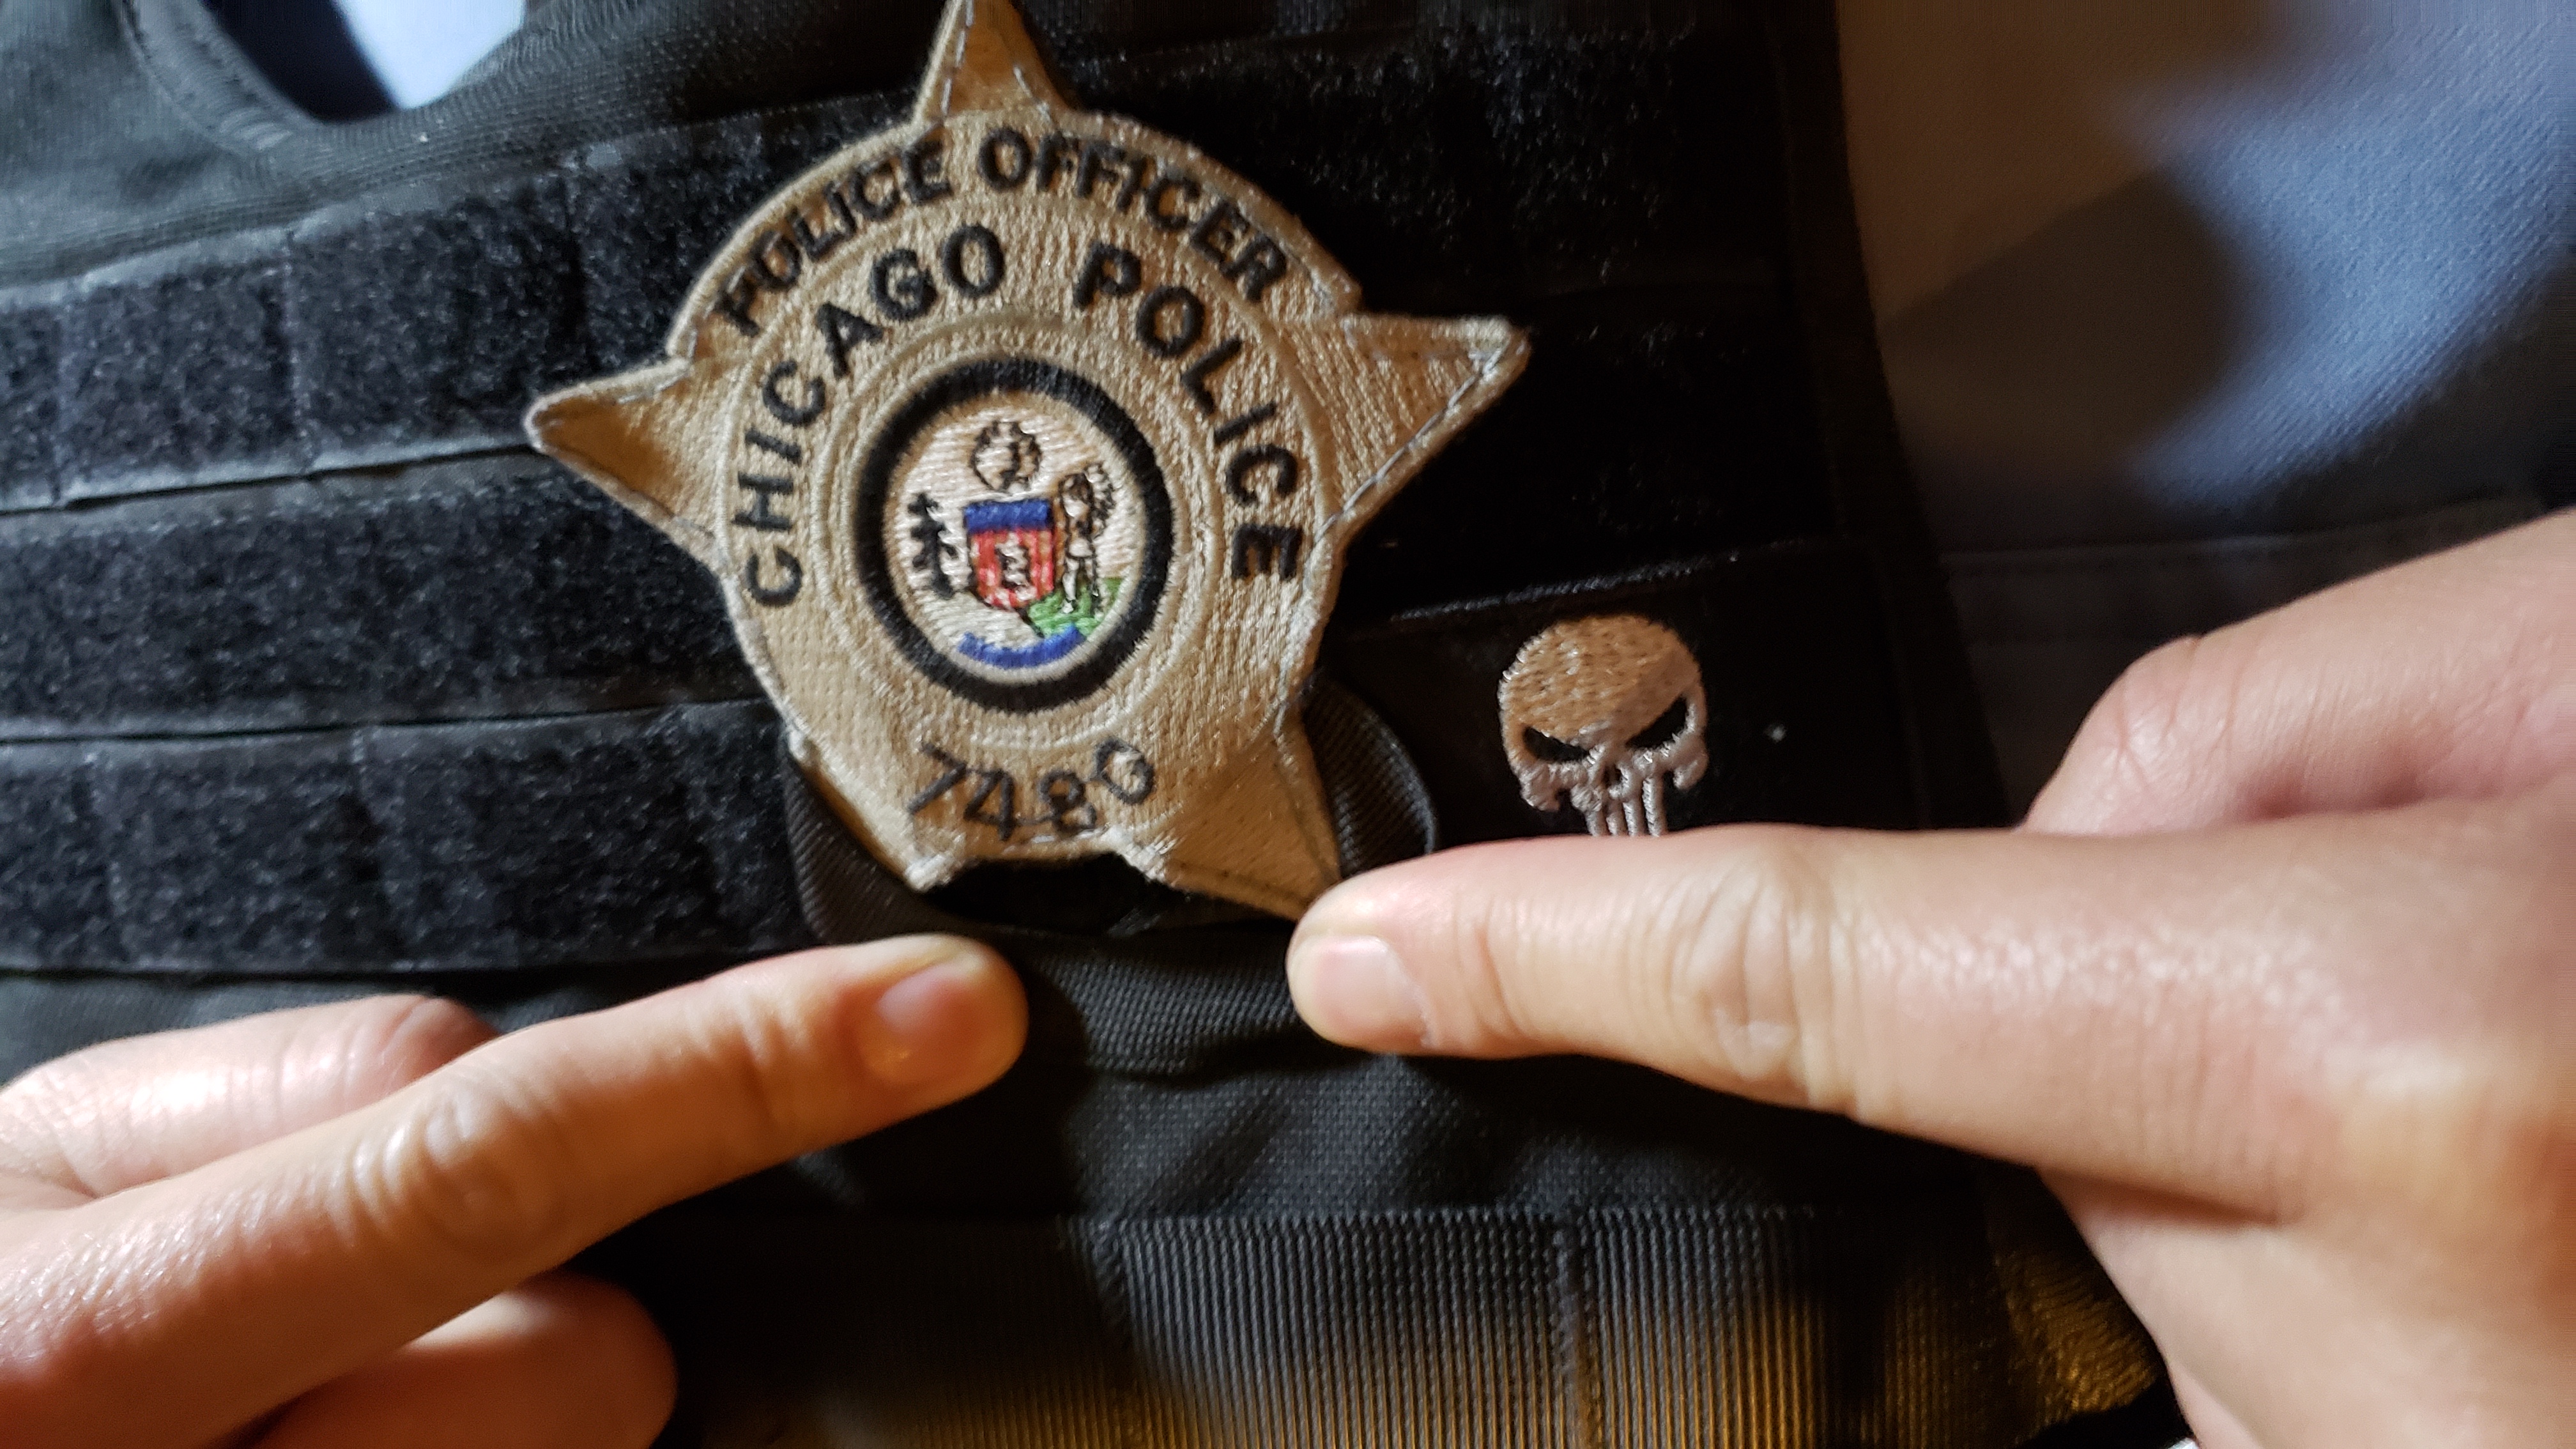 CHILDREN'S CHICAGO POLICE STAR BADGE: Police Officer - Chicago Cop